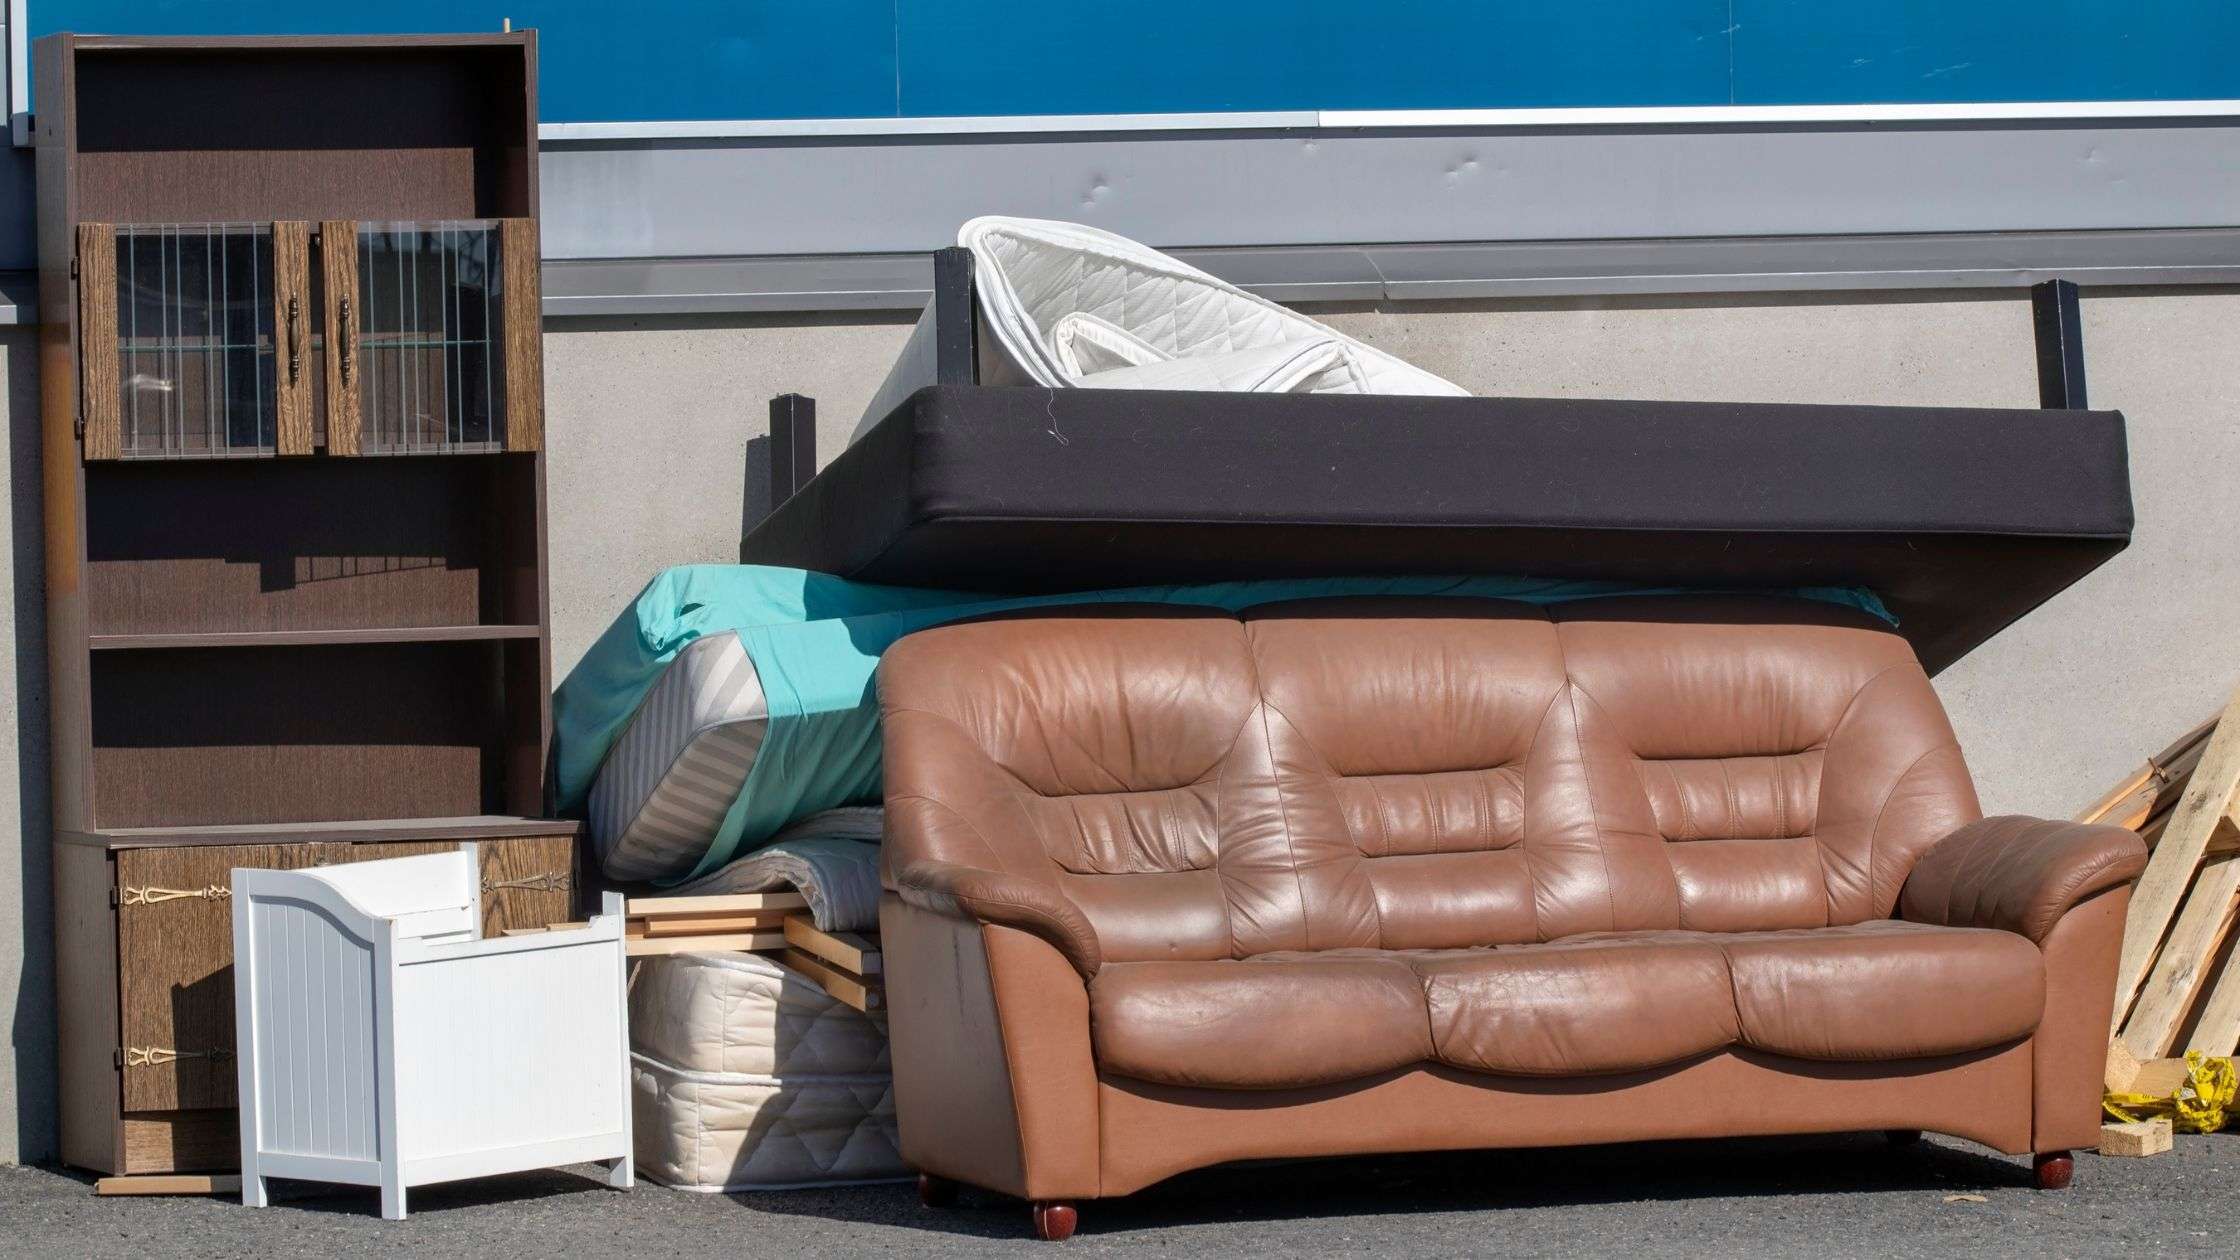 Where to Throw Away Furniture in Broward County